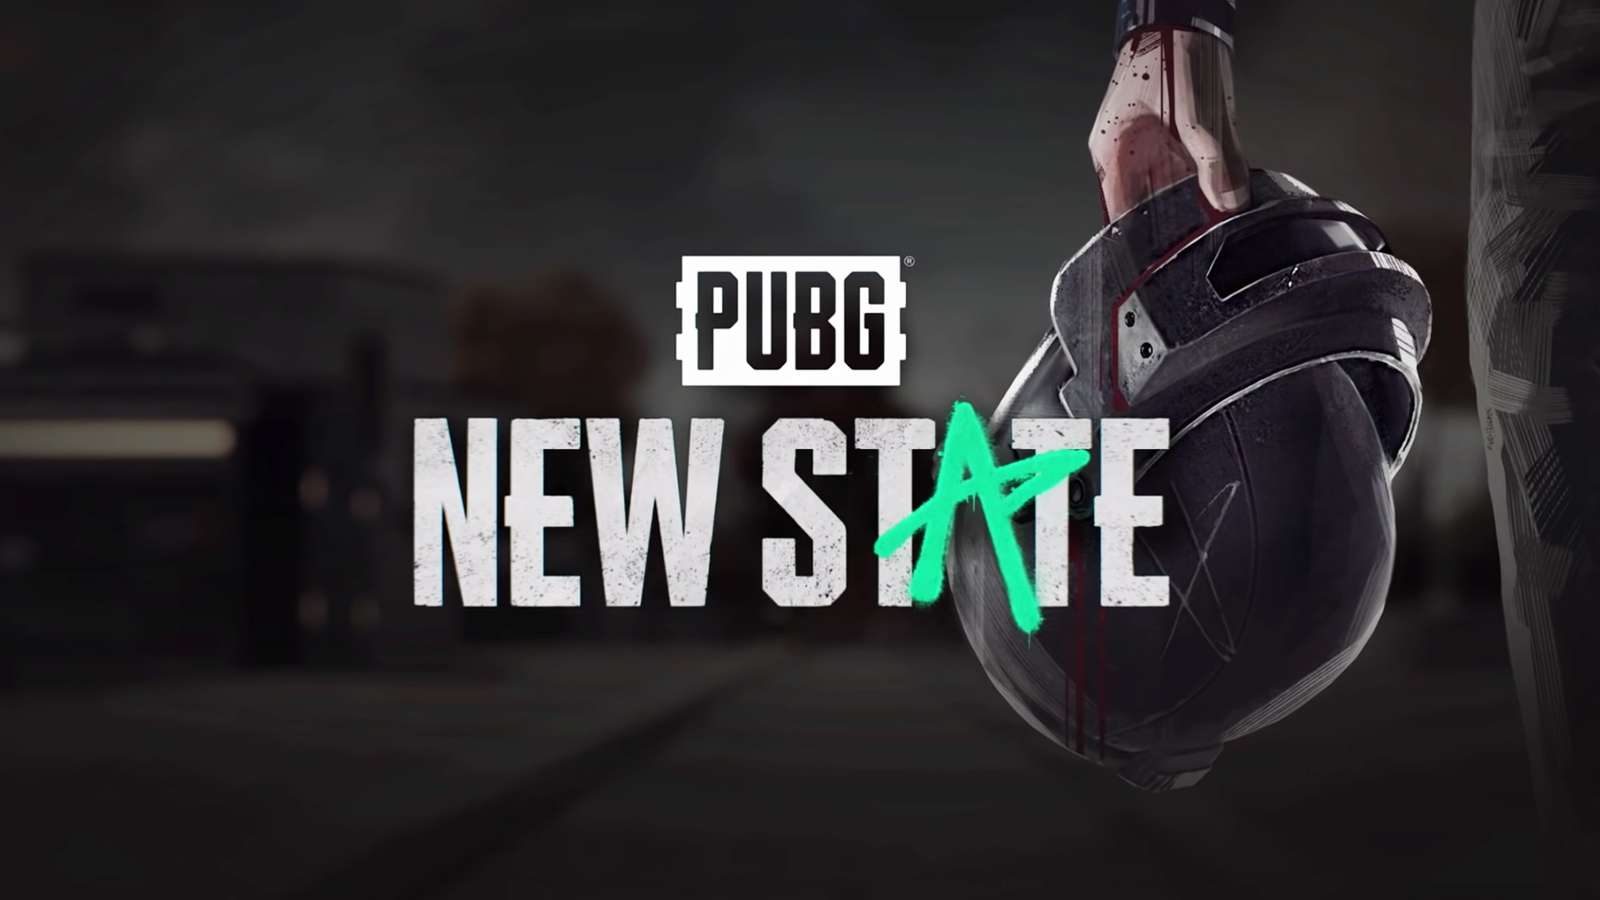 PUBG New State